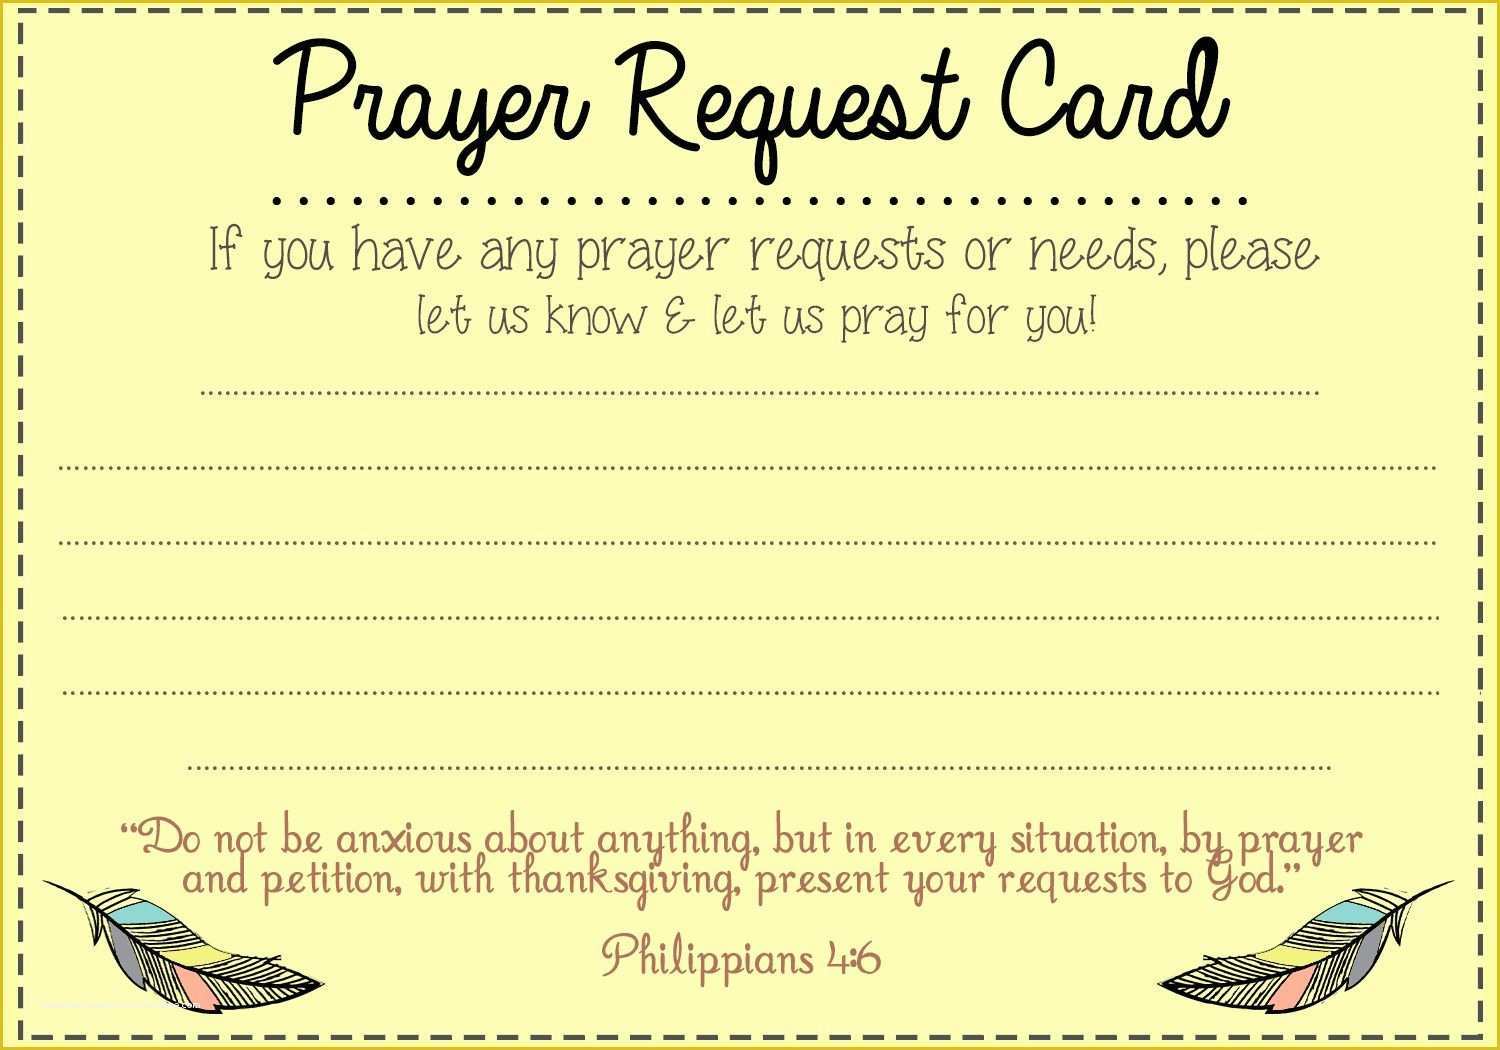 Free Prayer Request Card Templates Of Prayer Request Card Idea Mops Pinterest